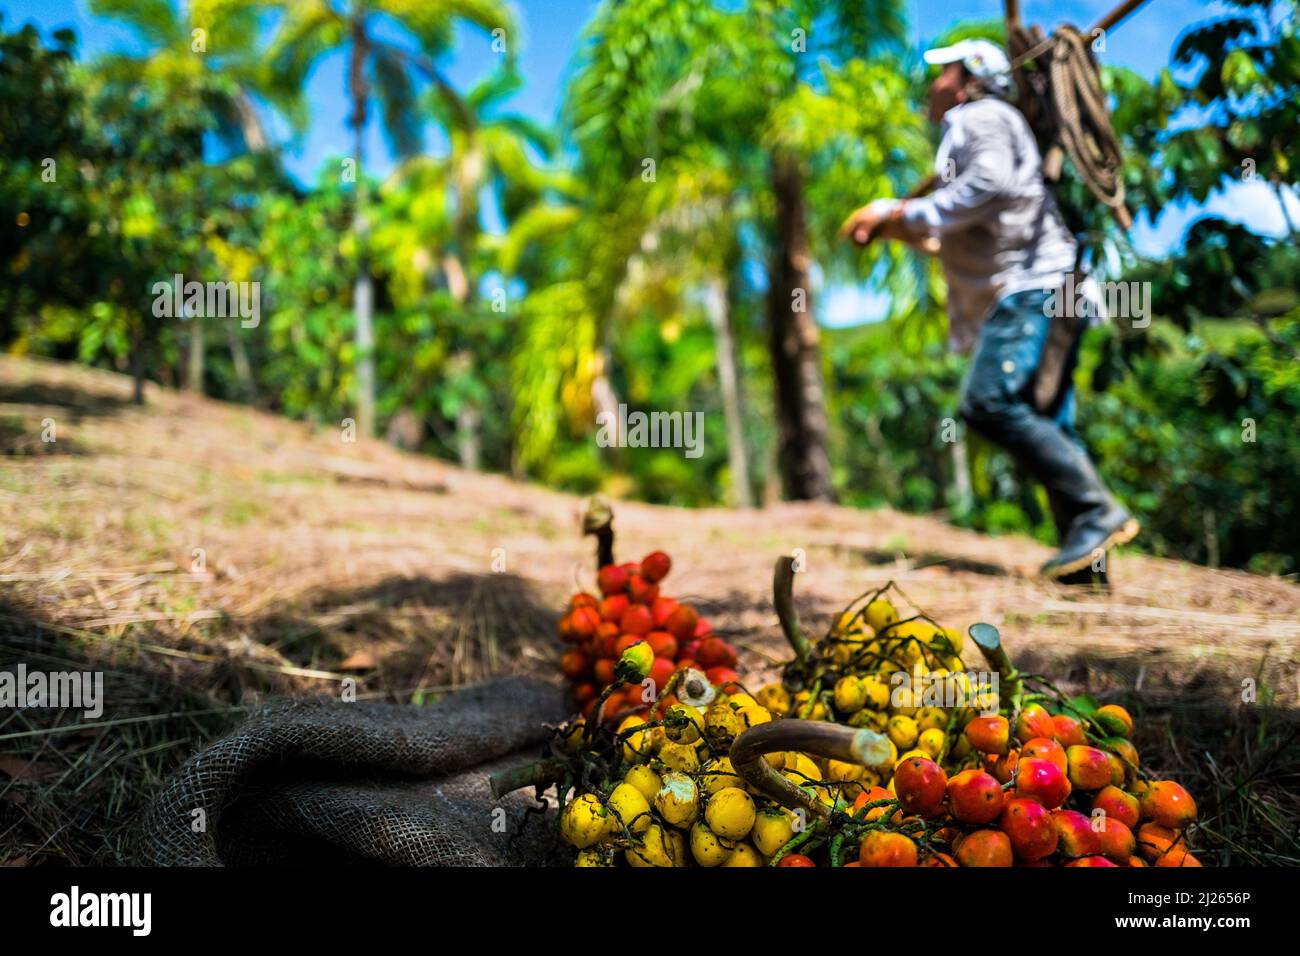 A Colombian farmer, carrying the marota scaffold, walks along freshly harvested chontaduro (peach palm) fruits on a farm near El Tambo, Colombia. Stock Photo